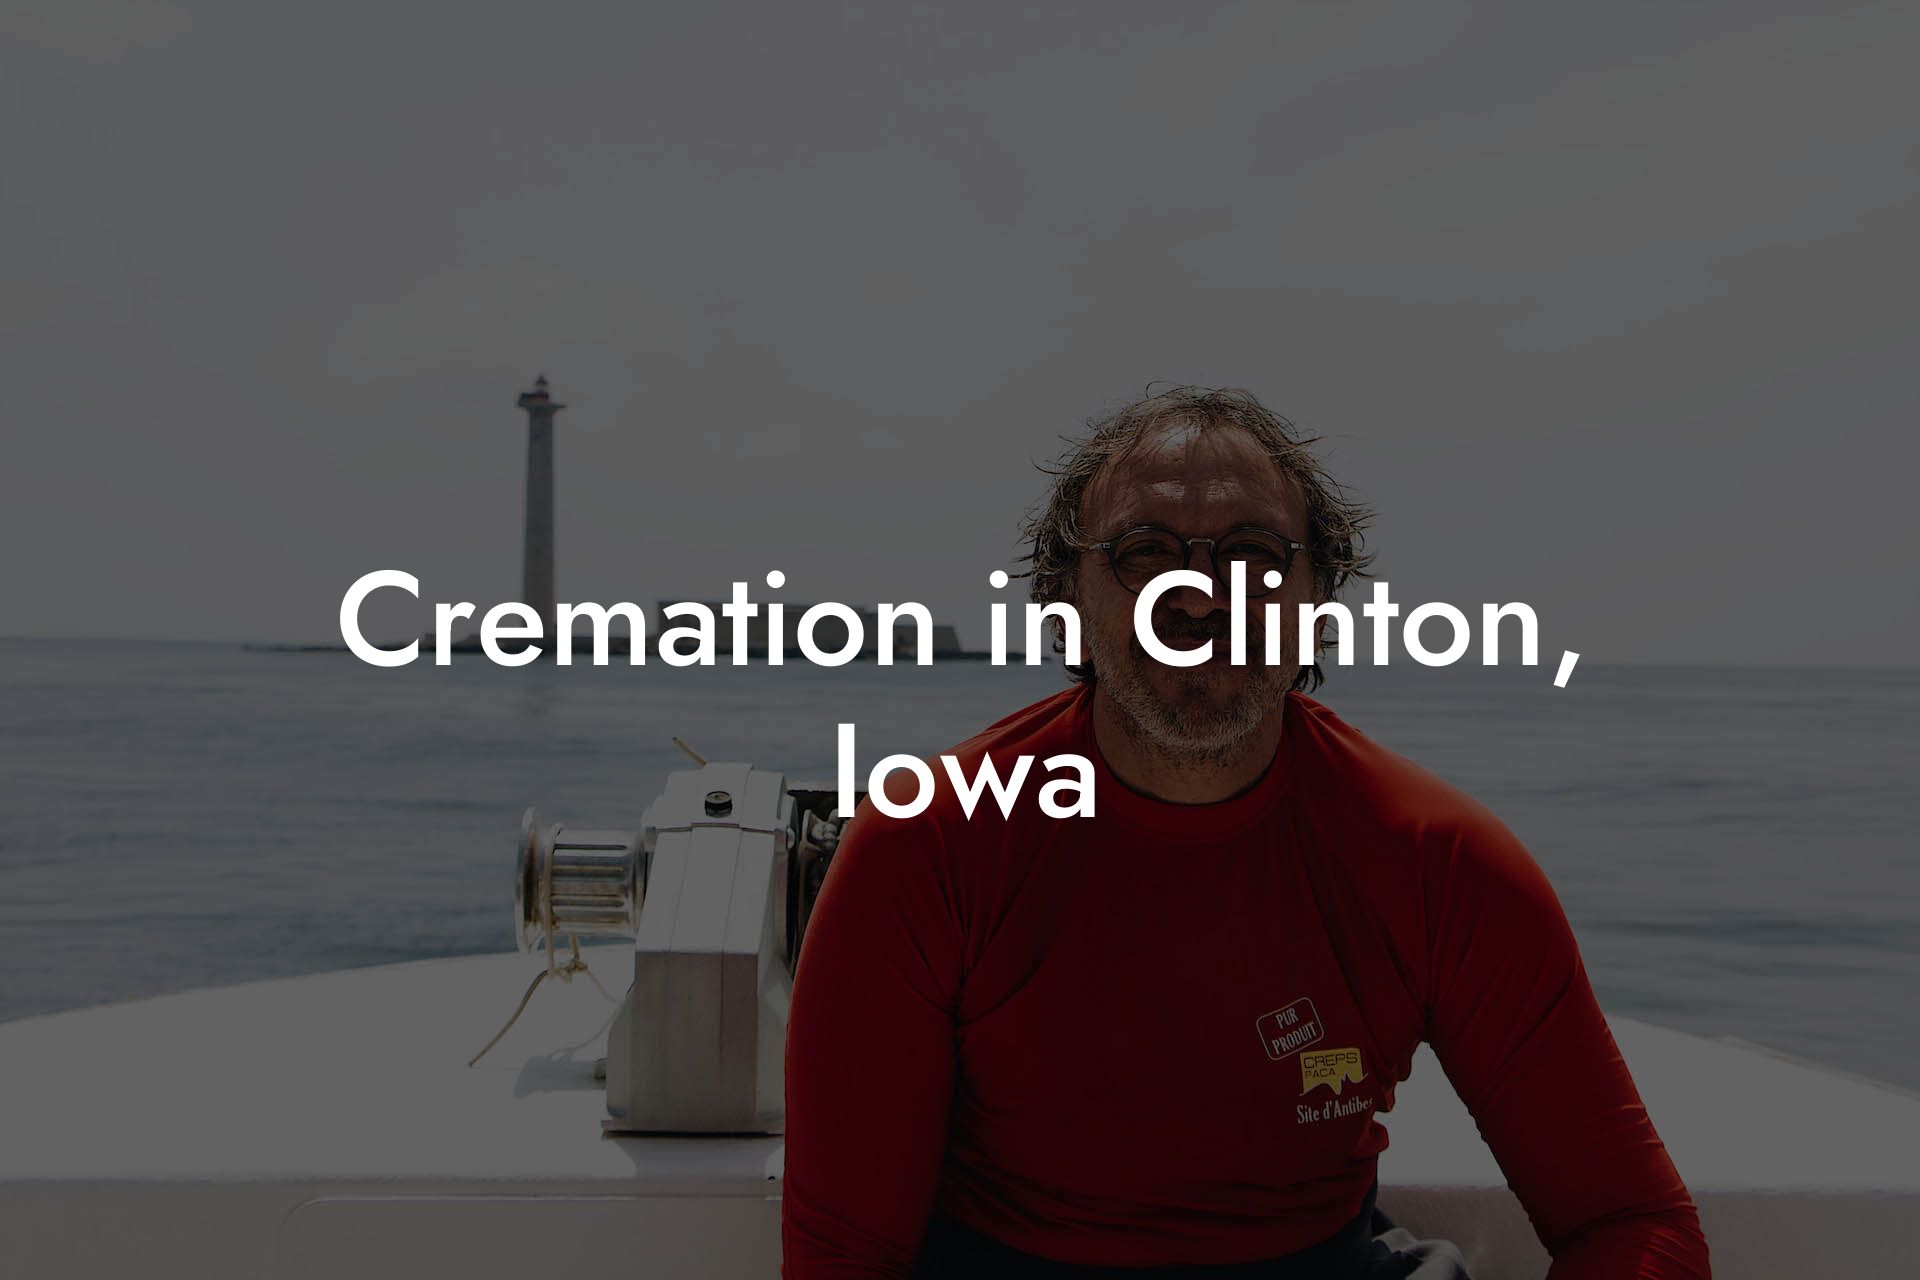 Cremation in Clinton, Iowa